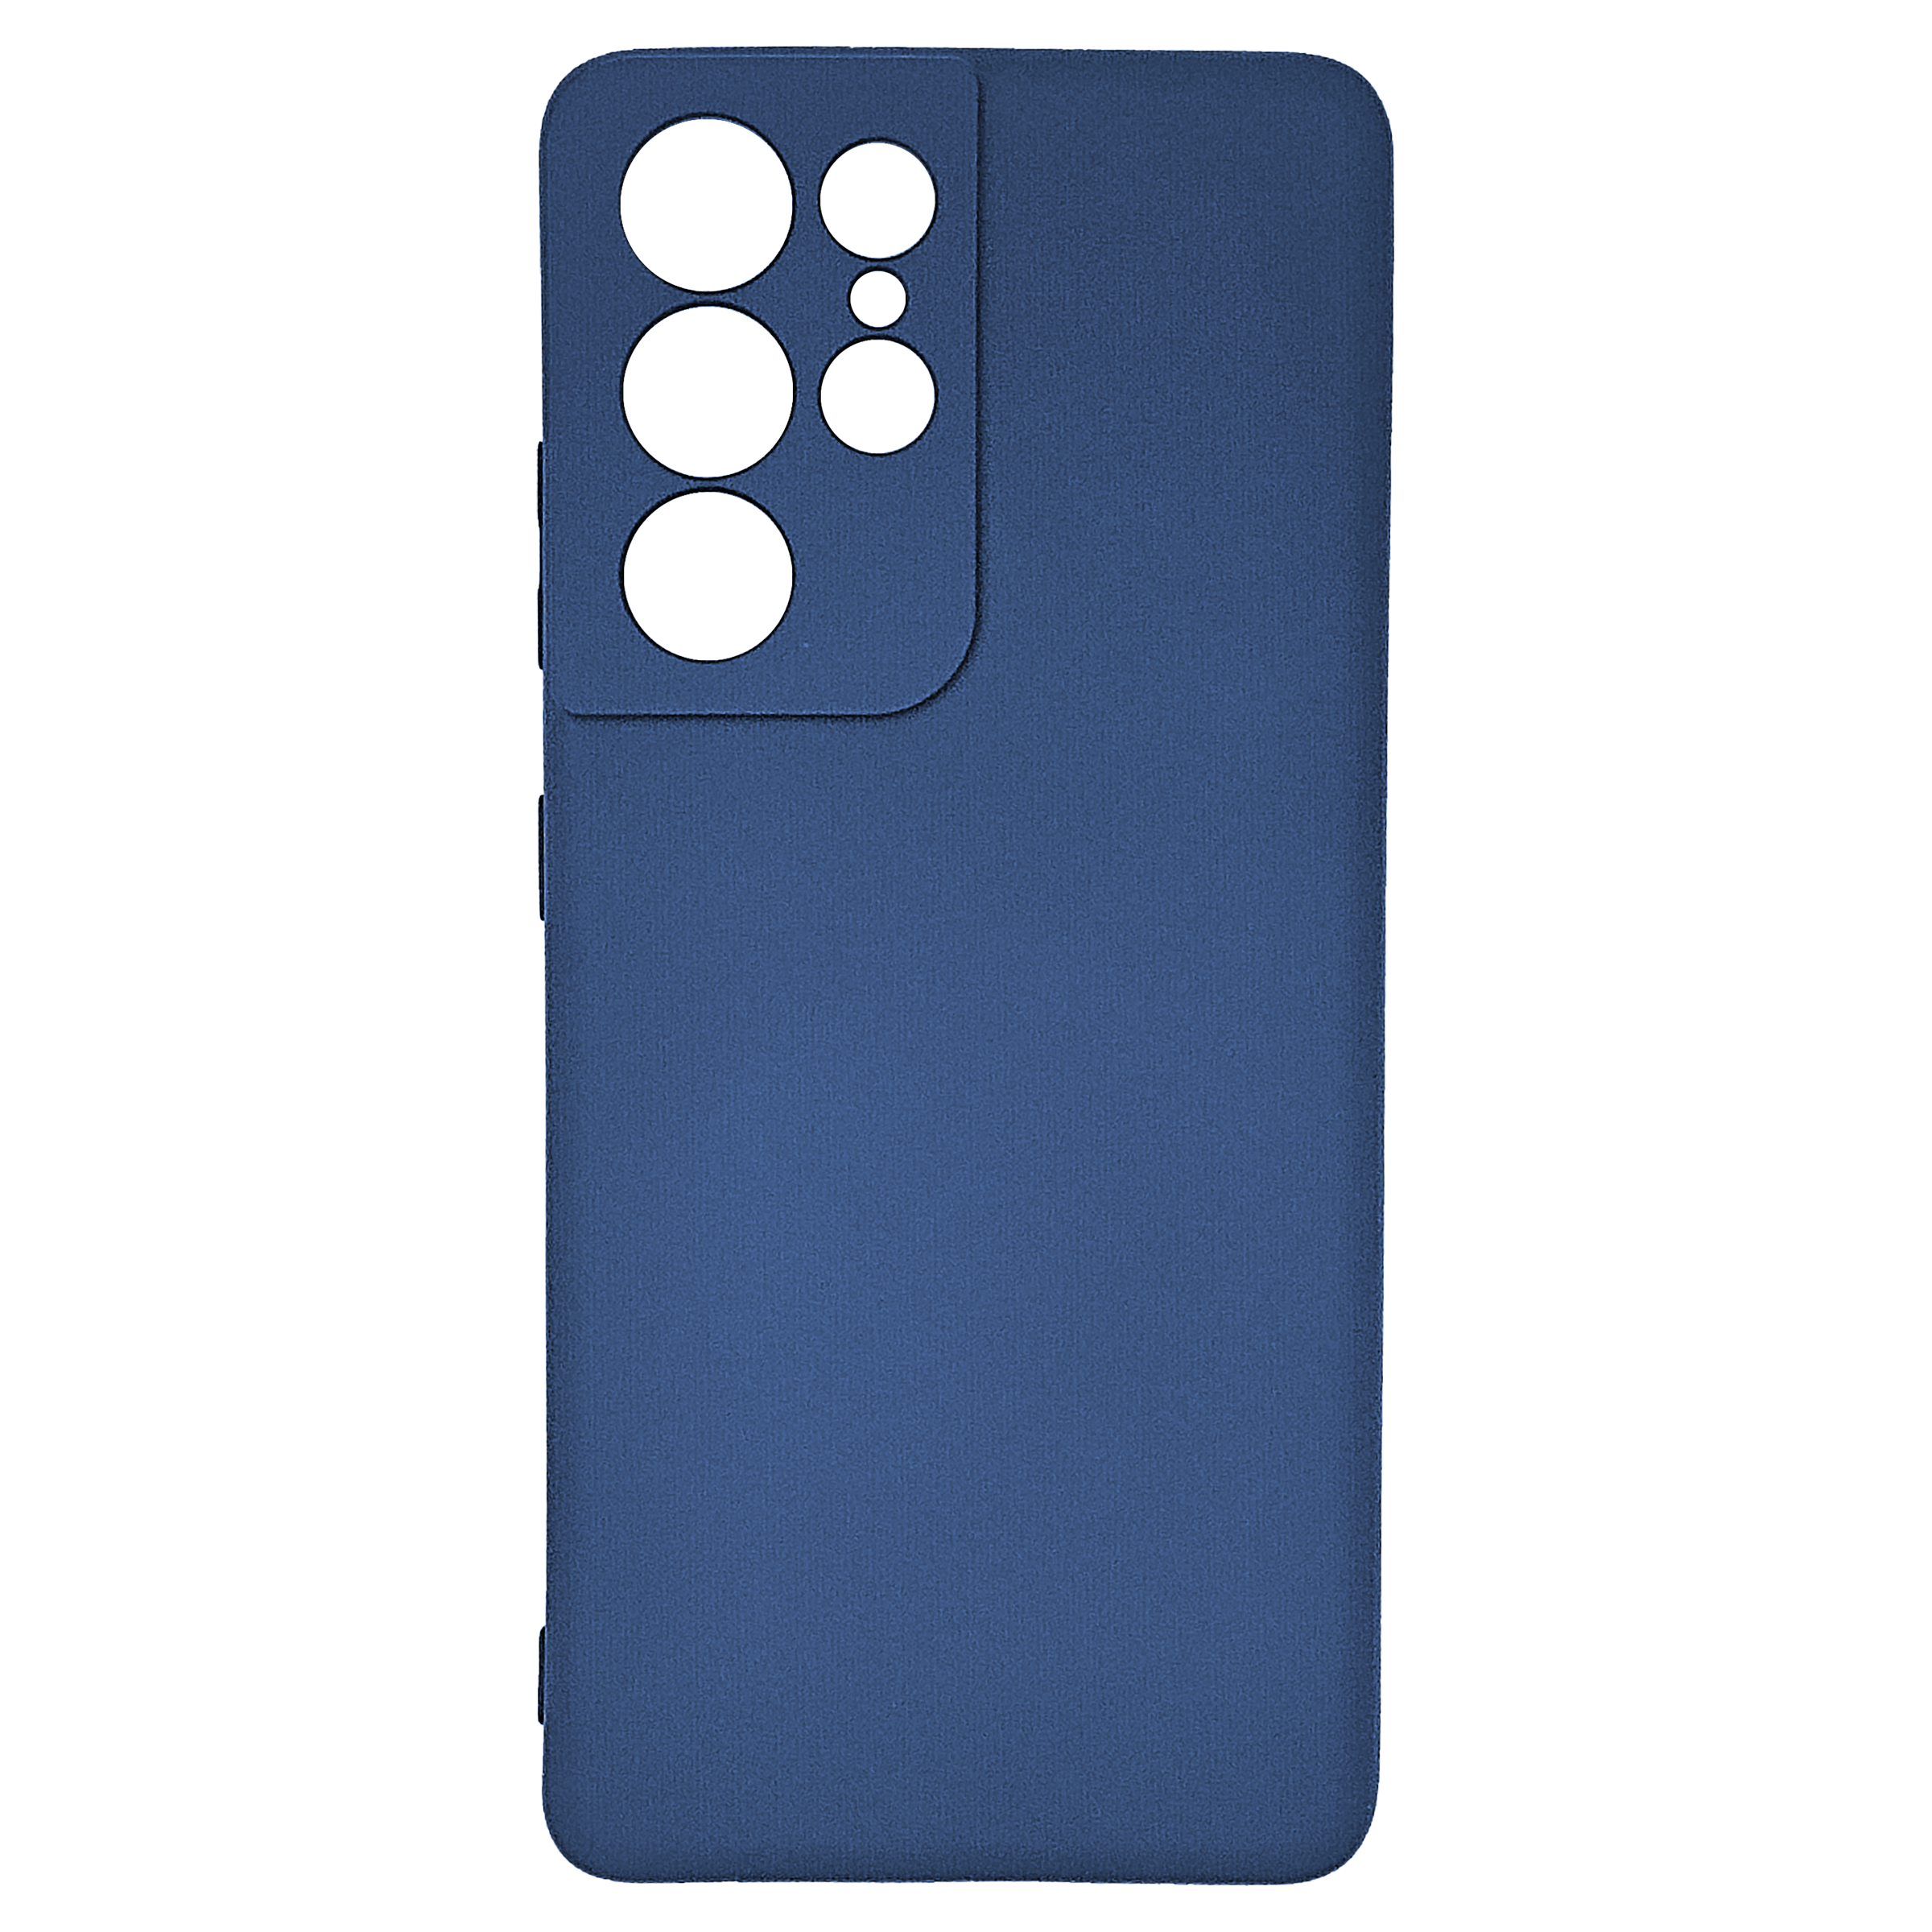 Soundrevo - Soundrevo TPU Back Case For samsung Galaxy S21 Ultra (Anti-Slip, C021U, Blue)